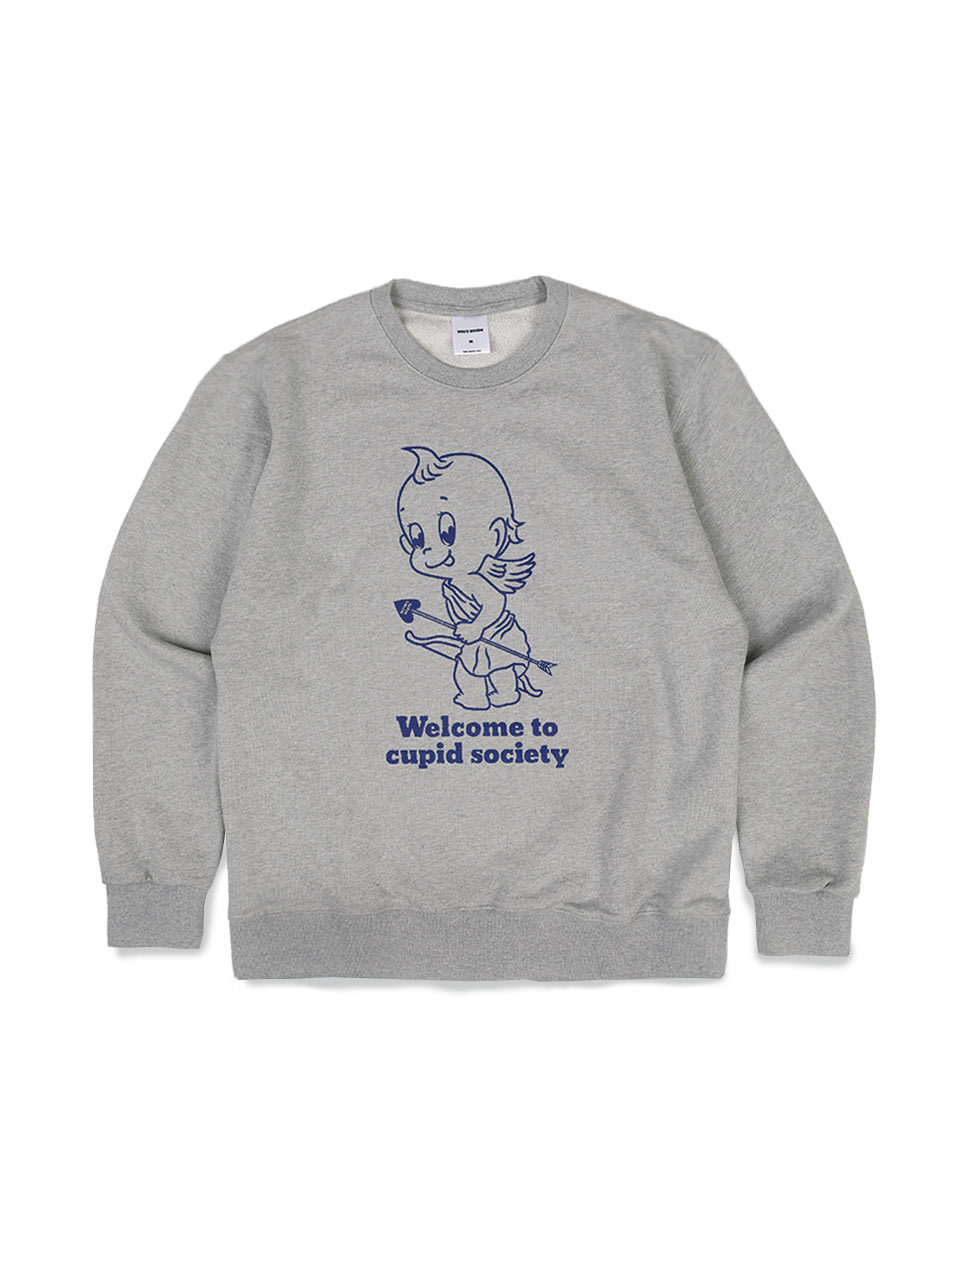 Cupid society Sweatshirt gray